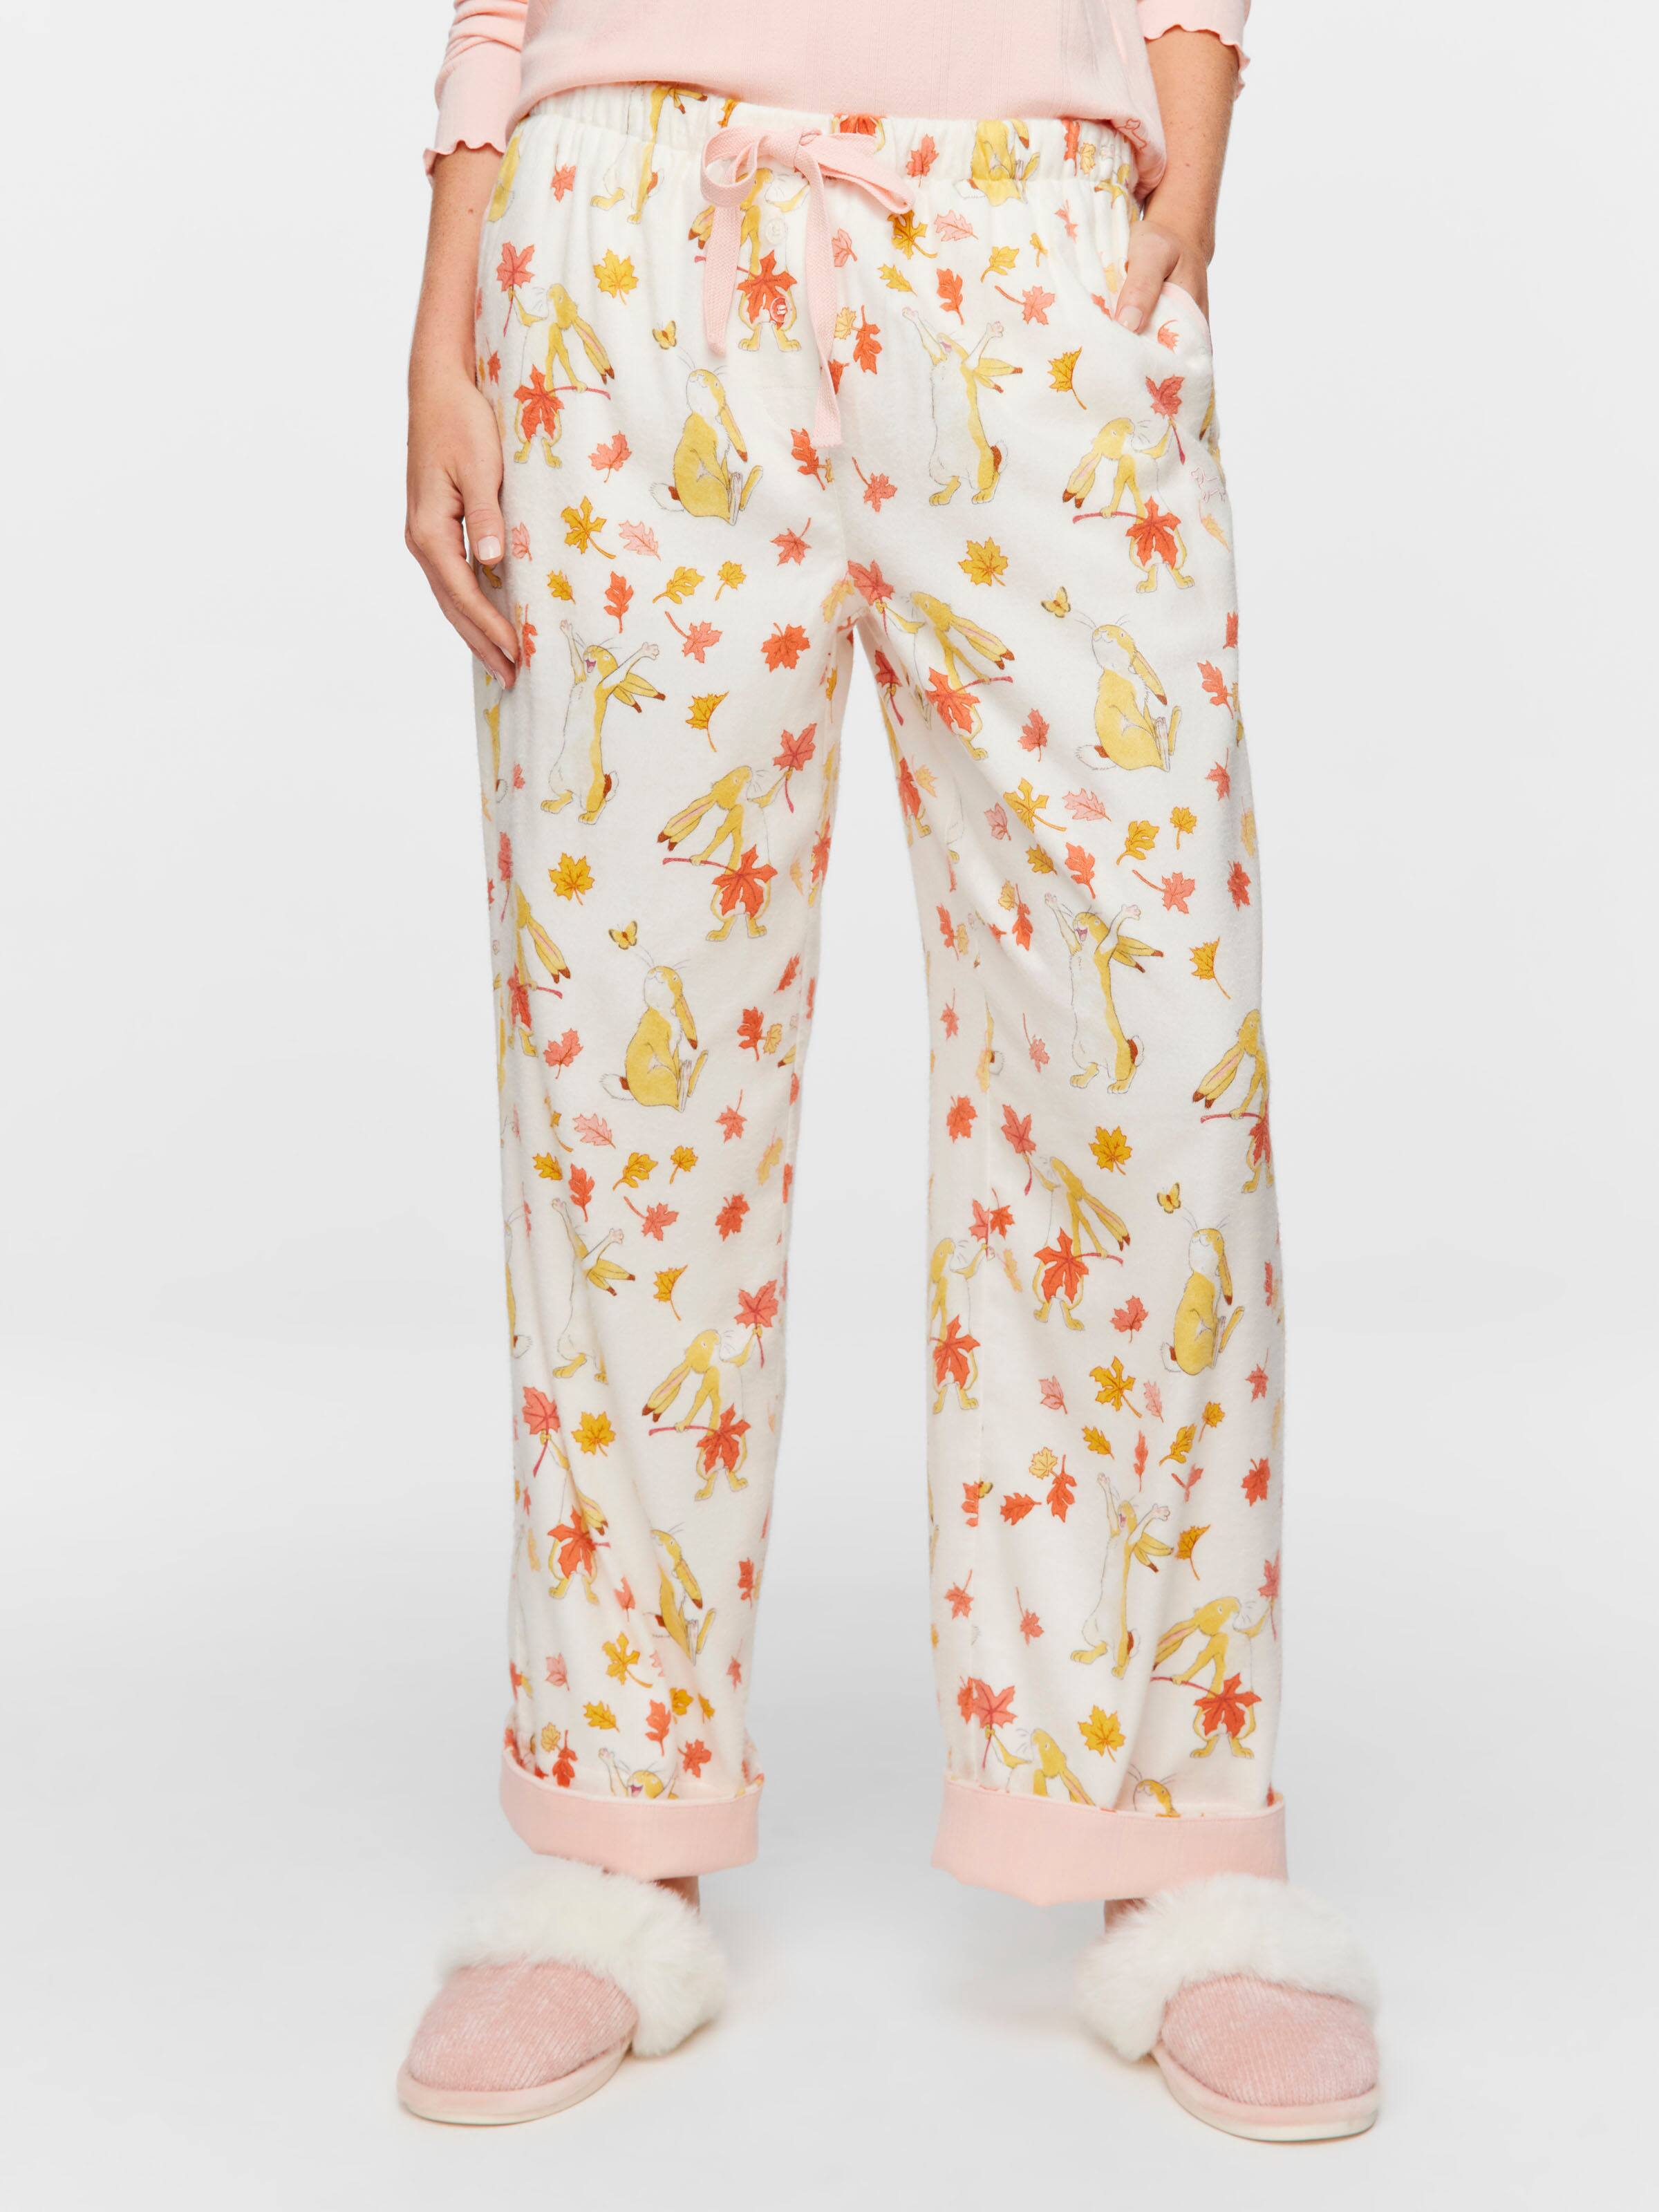 Womens Pyjama Pants - Flannelette Pants